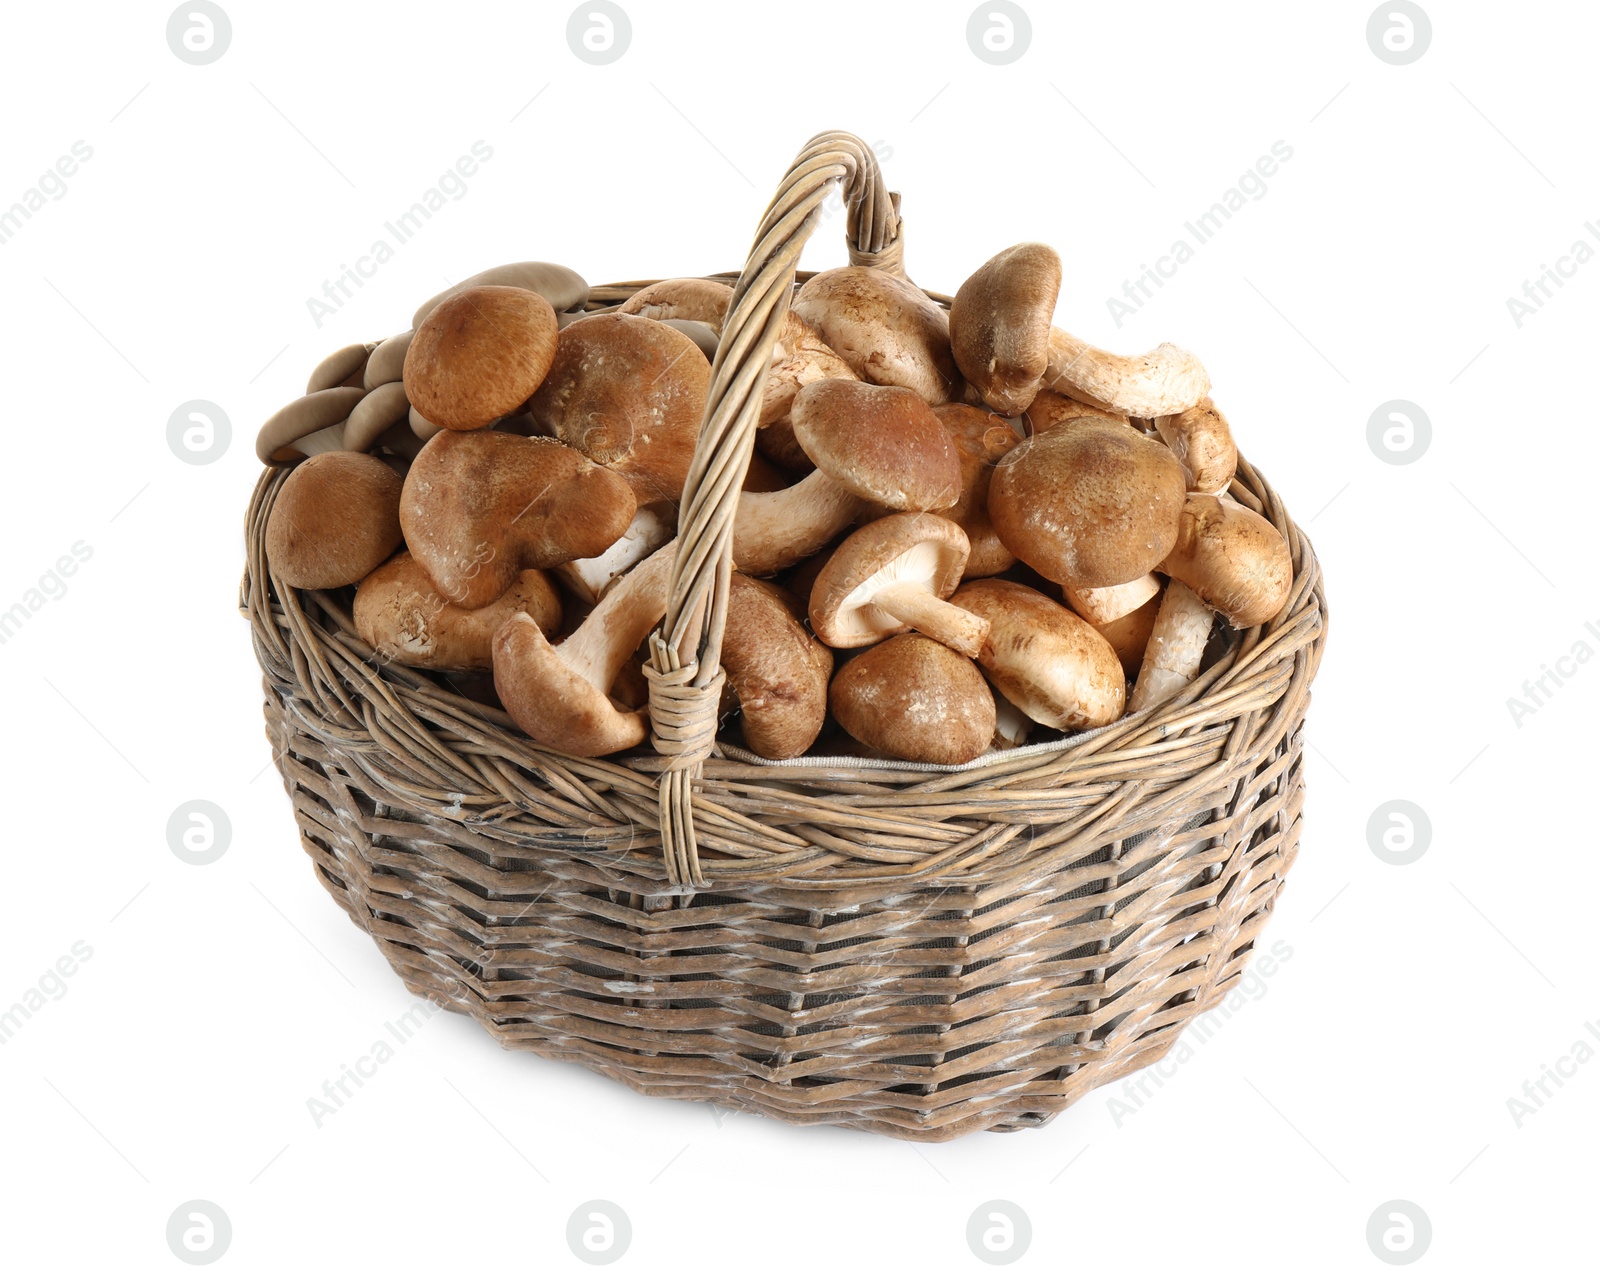 Photo of Fresh wild mushrooms in wicker basket on white background. Edible fungi